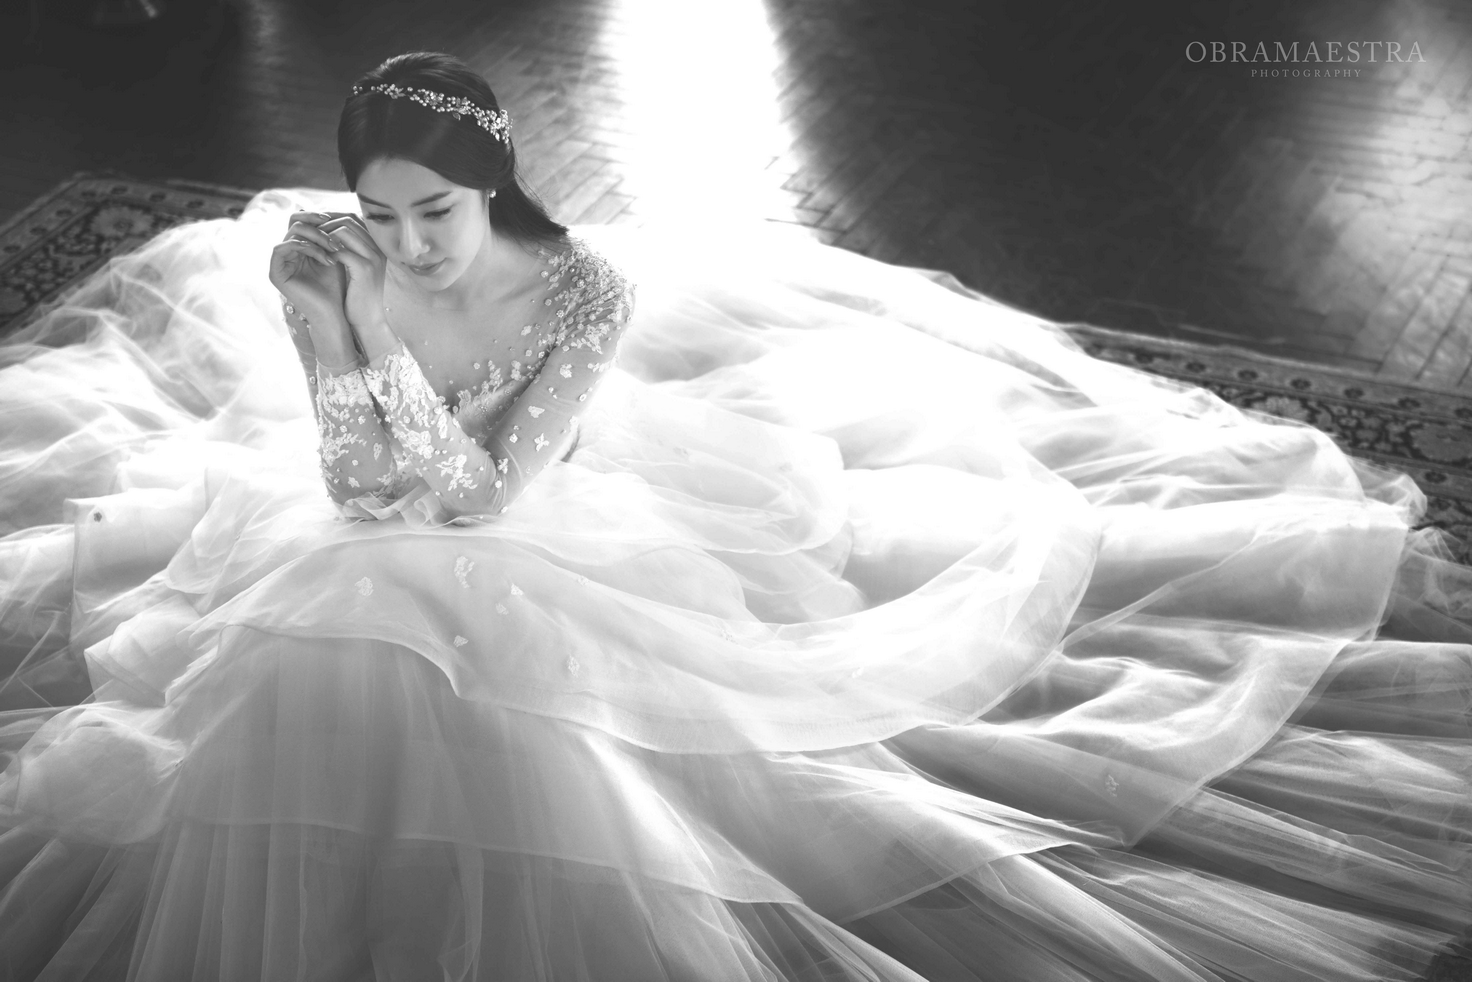  Obra Maestra Studio Korean Pre-Wedding Photography: 2017 Collection by Obramaestra on OneThreeOneFour 35